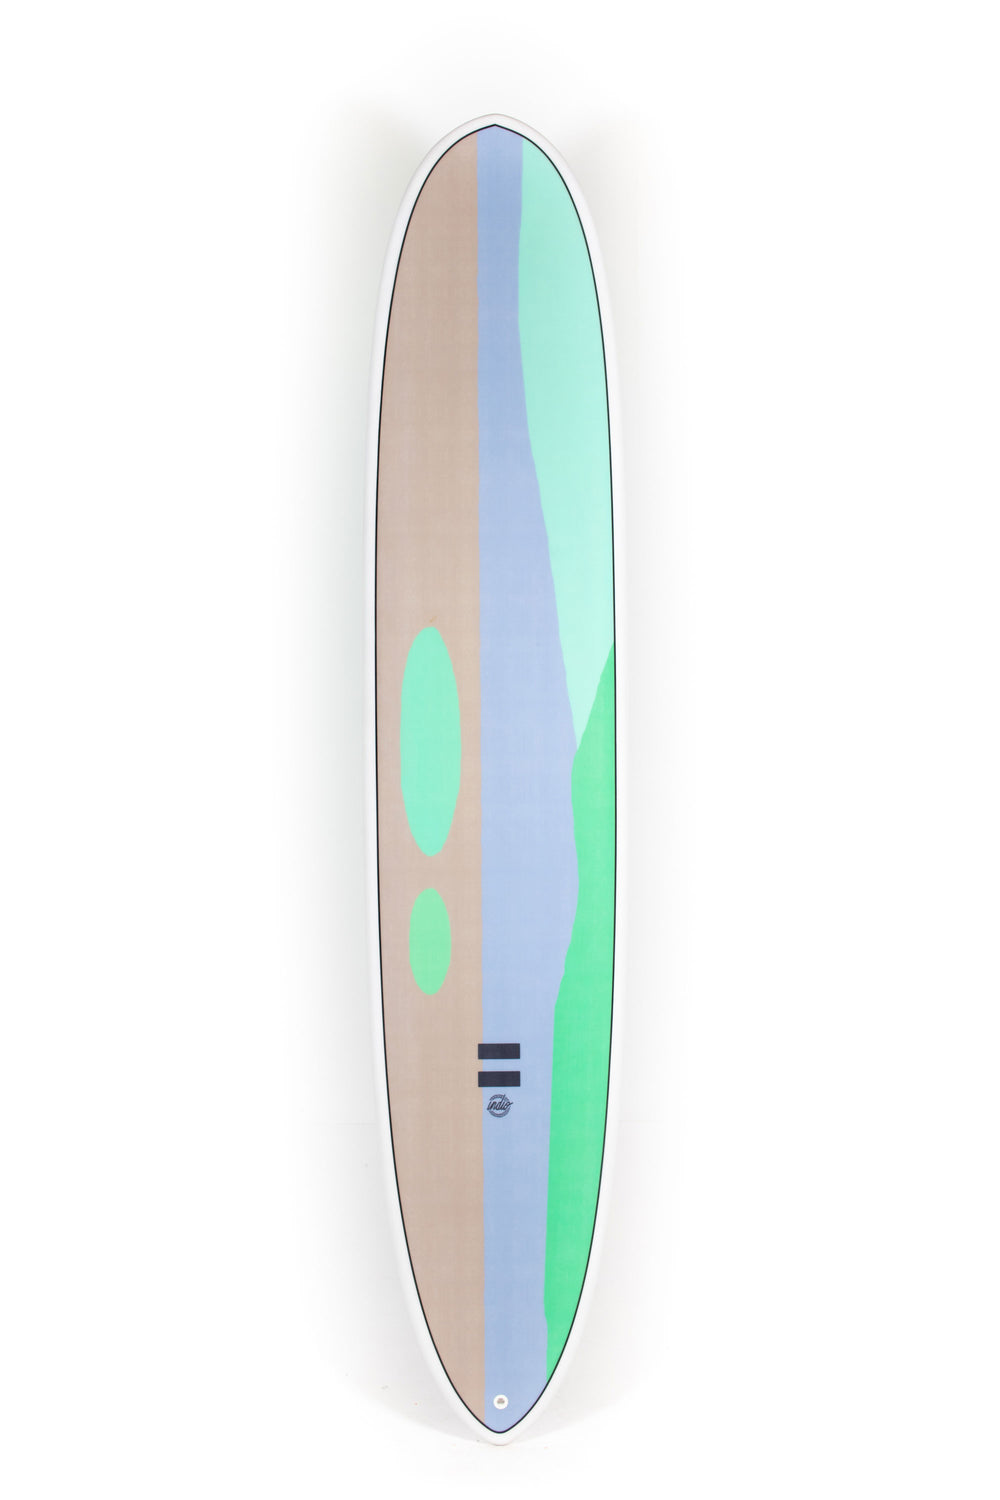 Pukas Surf Shop -  Indio Surfboards - TRIM MACHINE India 2 - Indio Endurance 9’1” x 21”7/8 x 2”7/8 - 70.2L